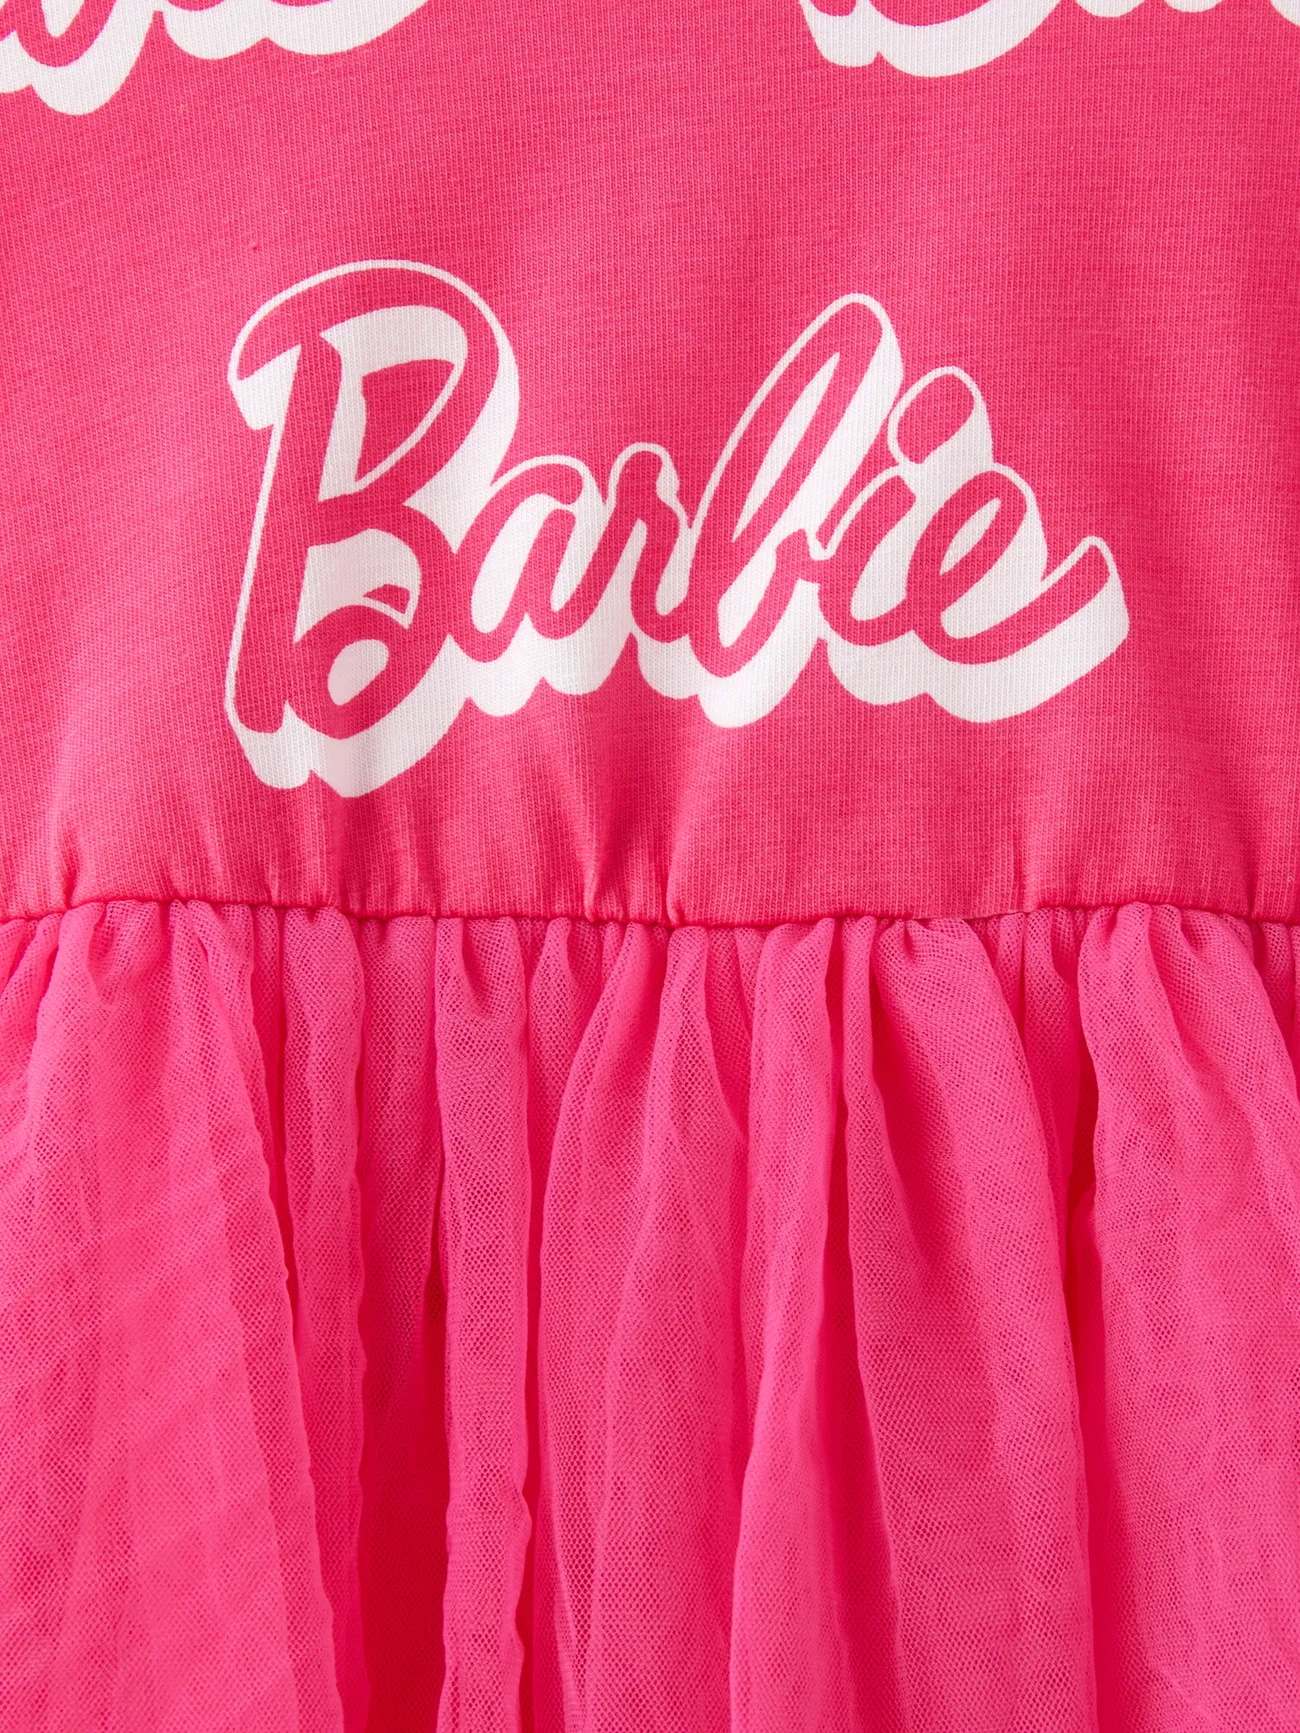 Barbie Baby Girl Cotton Letter Print Sesh Tutu Skirt  Roseo big image 1